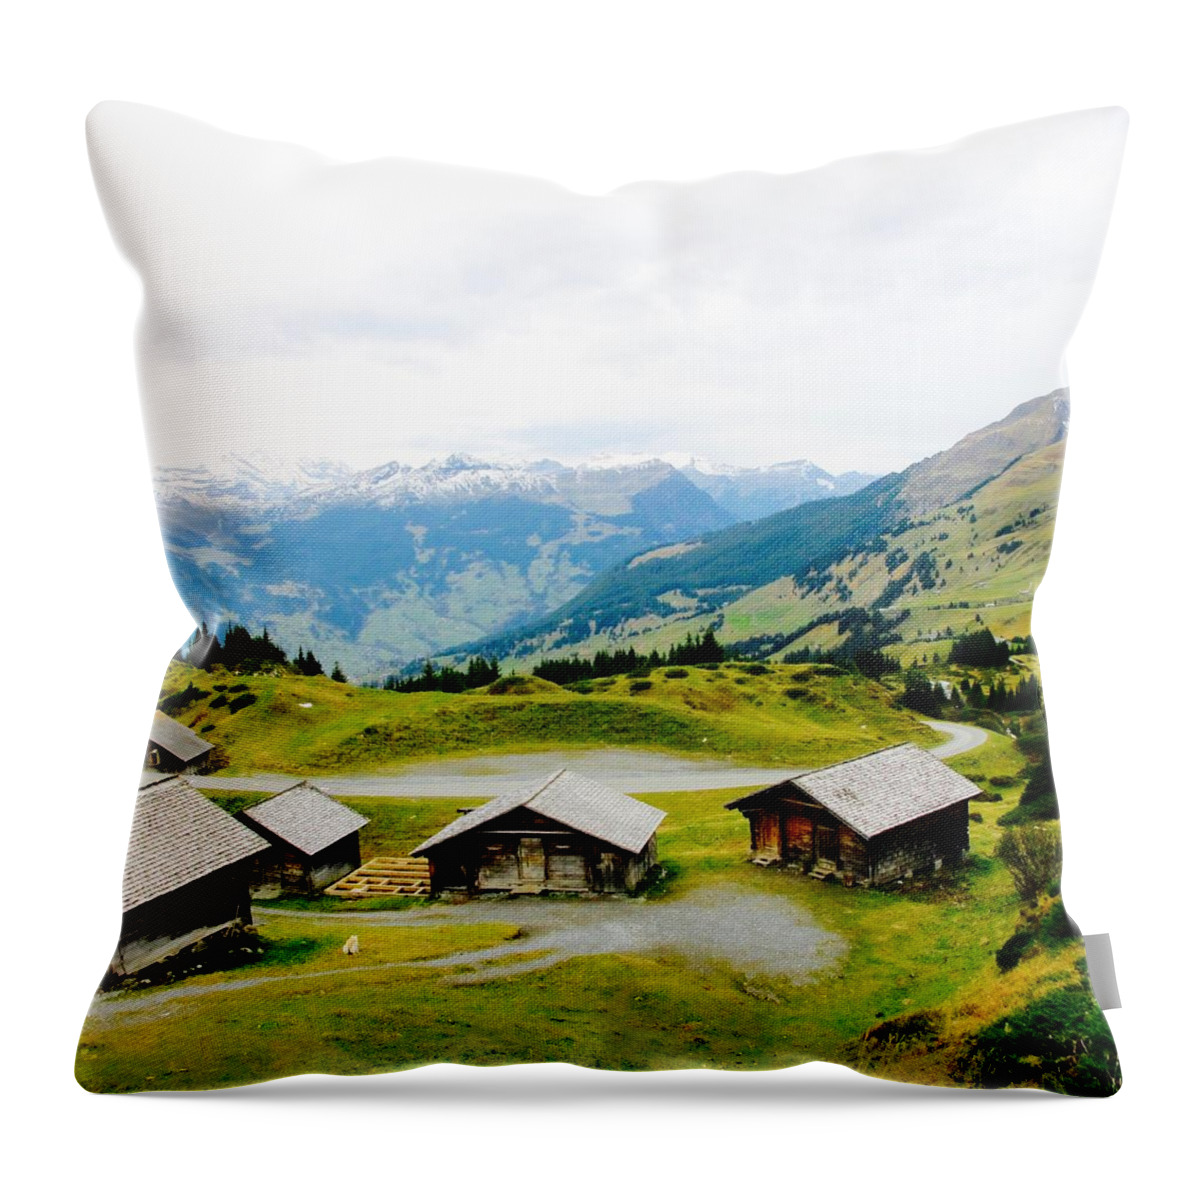 Zermatt Throw Pillow featuring the photograph Swiss mountain view by Sue Morris